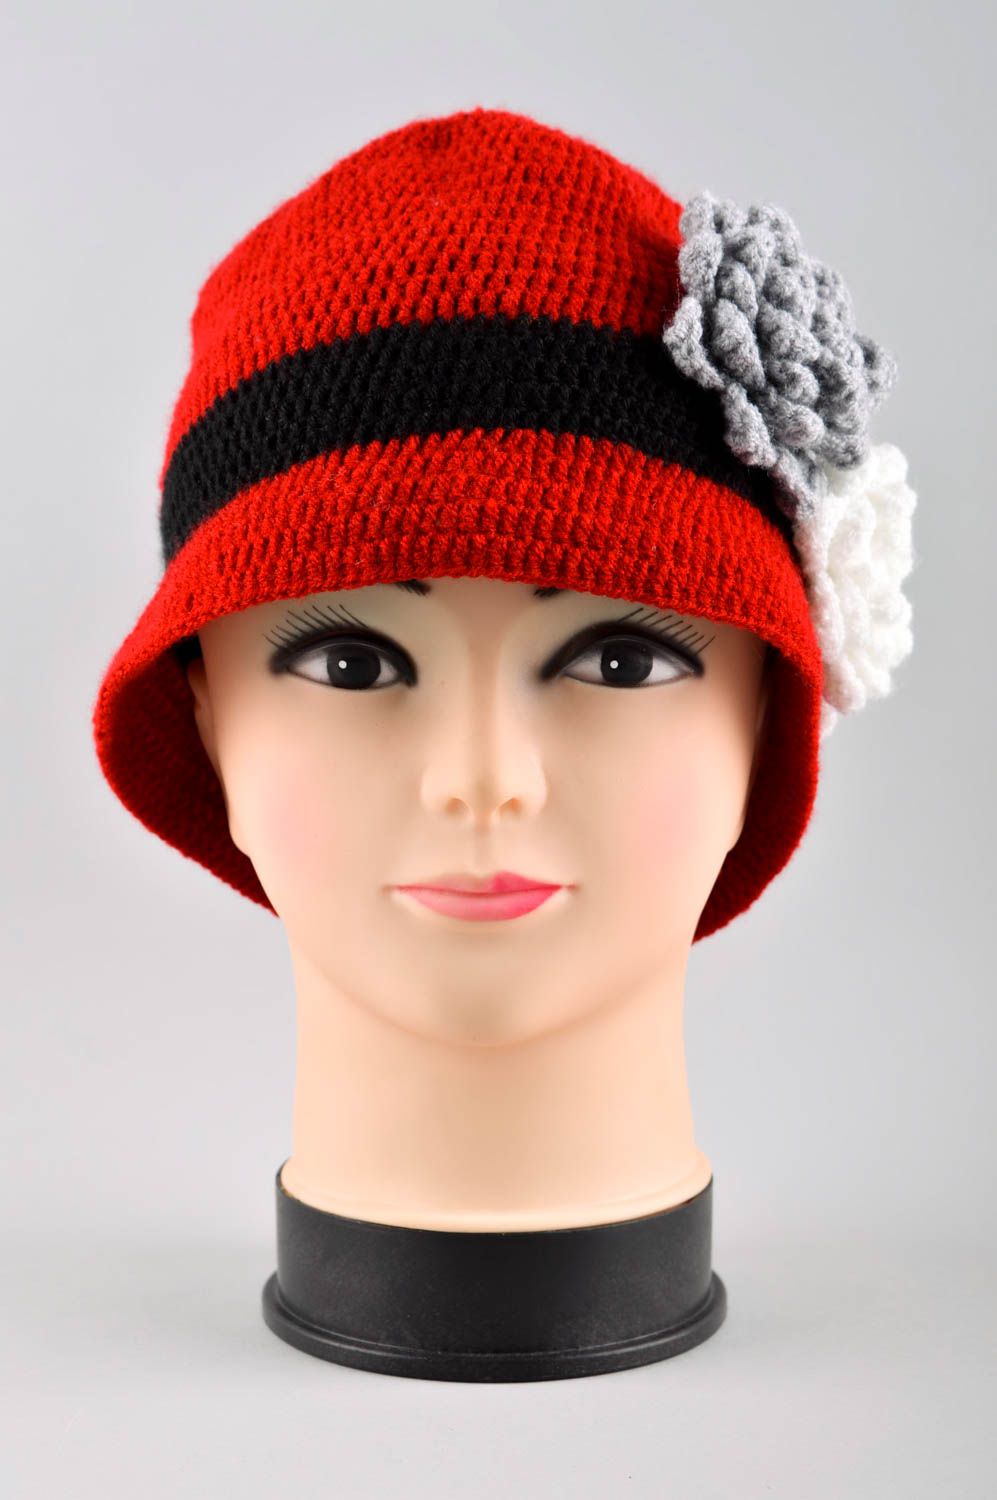 Handmade winter hat designer cap for girl gift ideas warm hat knitted hat photo 2